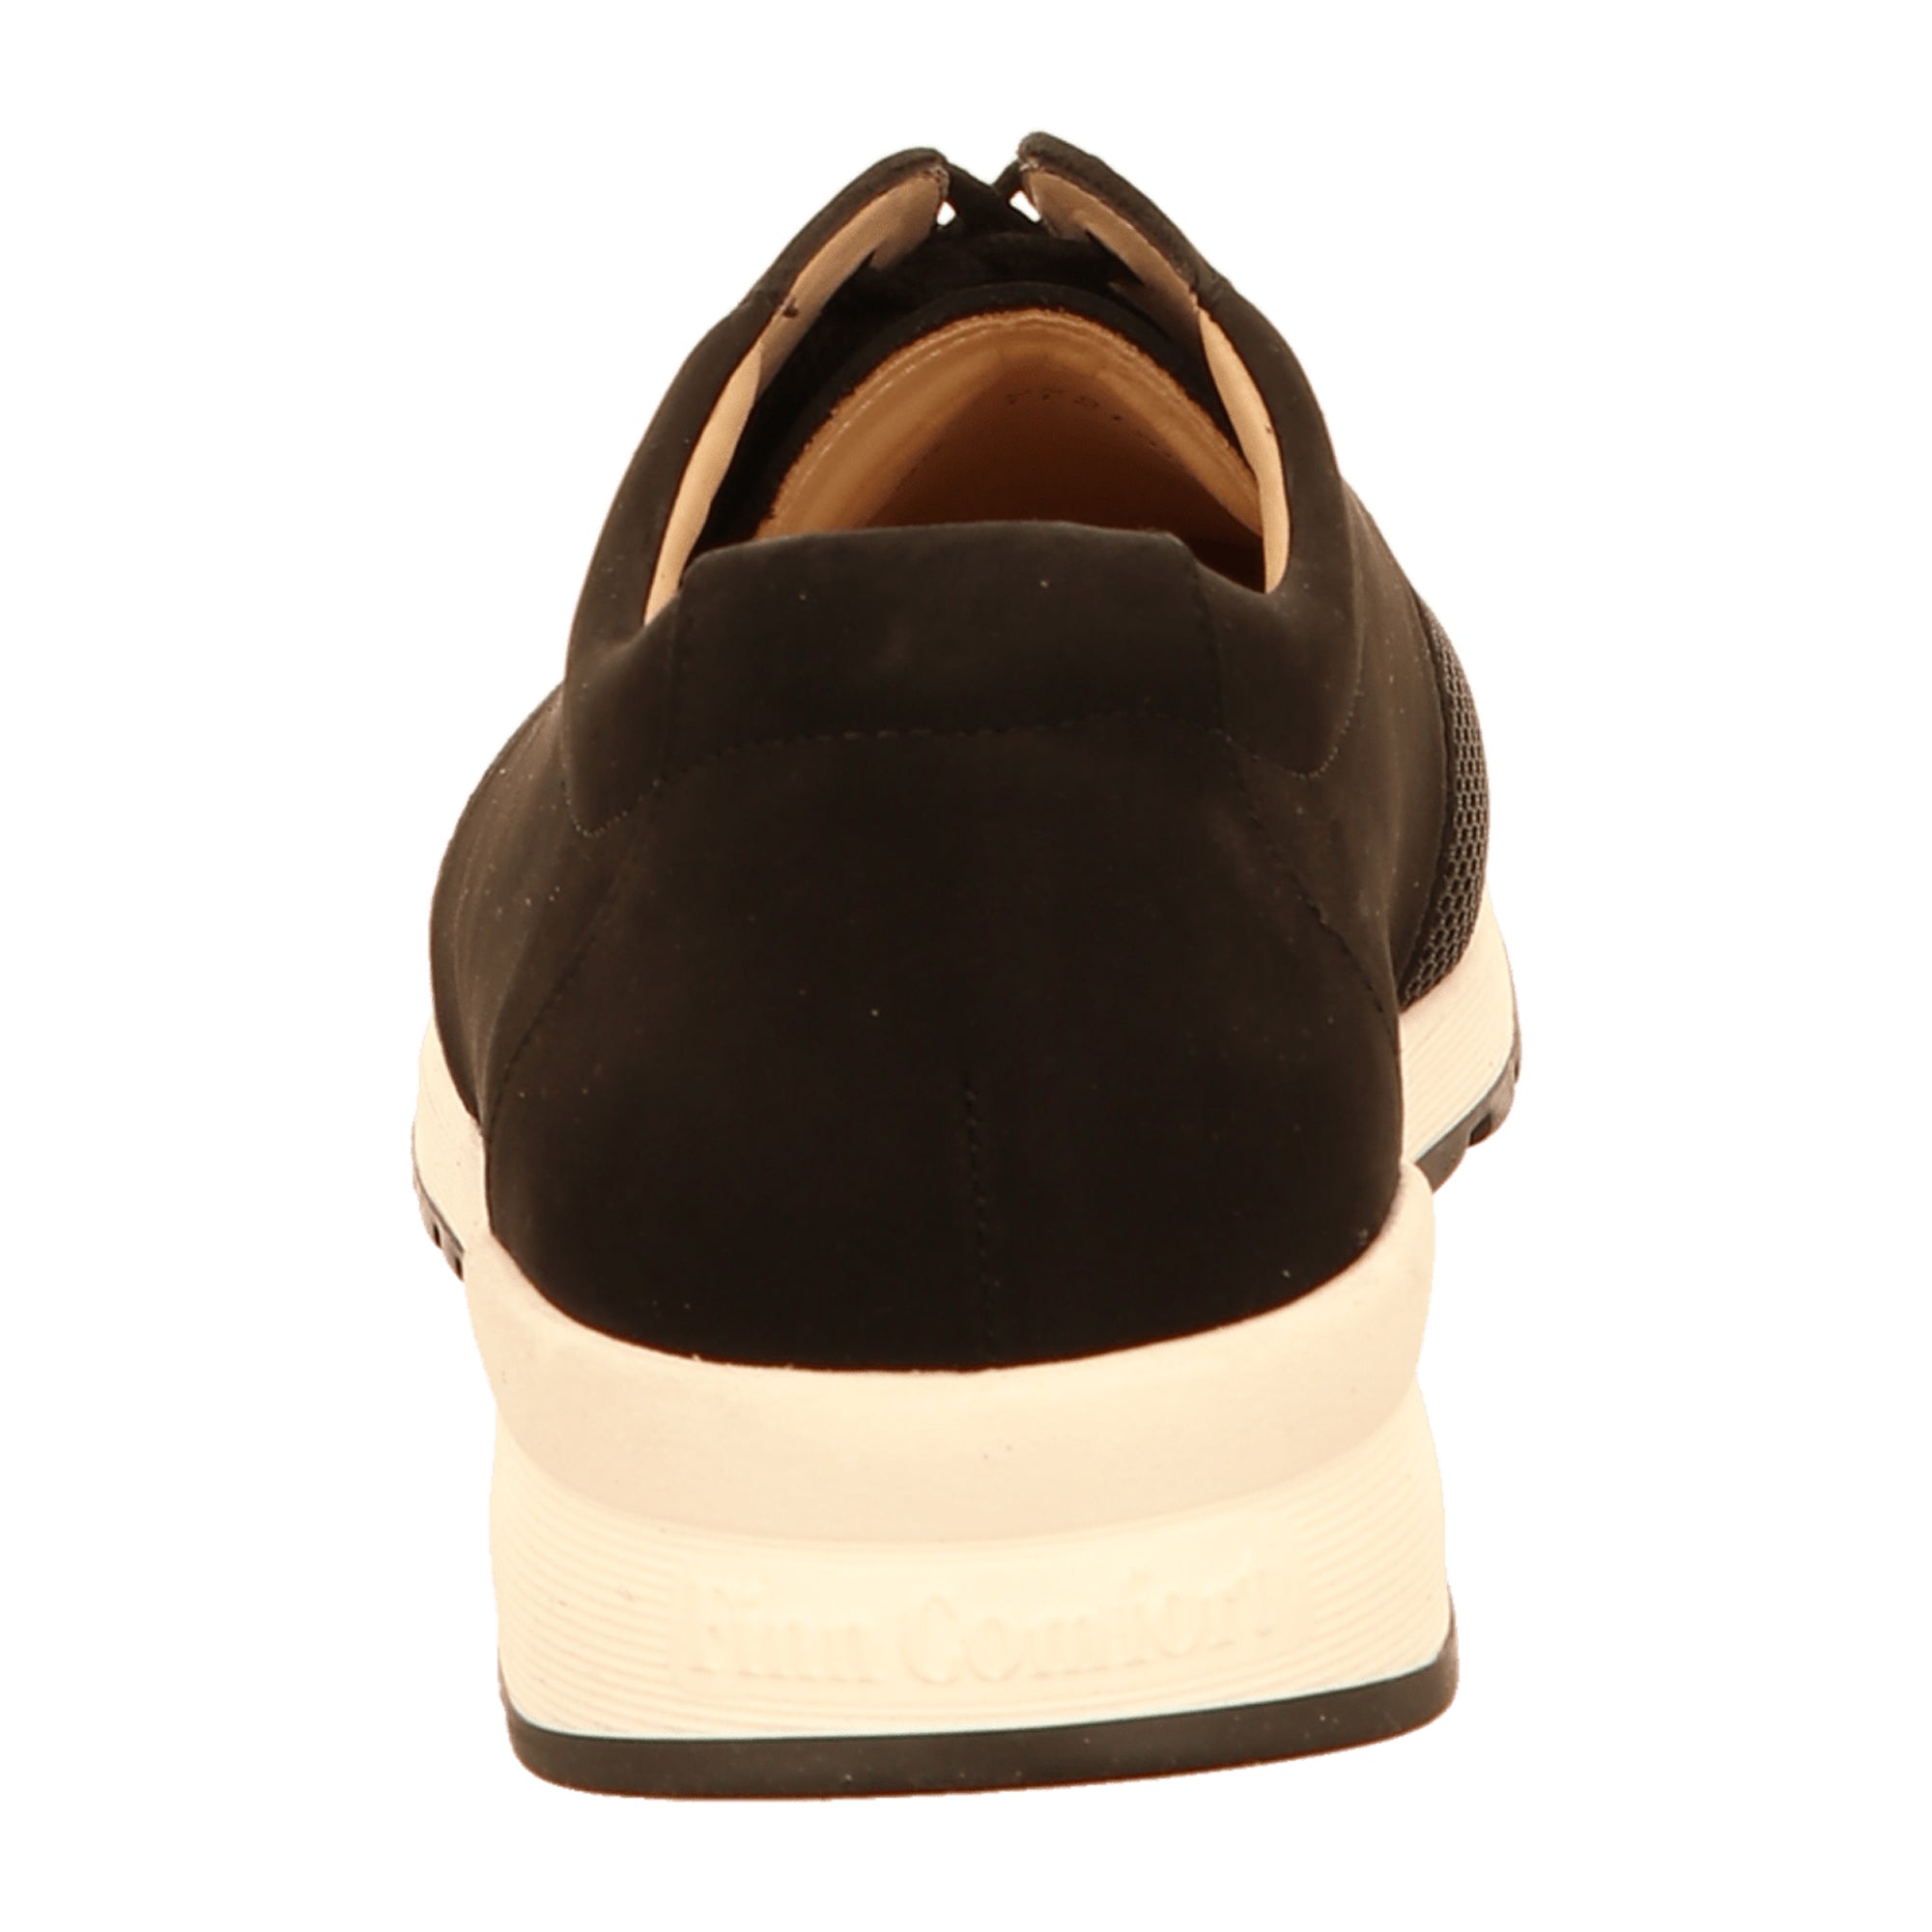 Finn Comfort Enfield Men’s Black Leather Shoes - Stylish & Durable